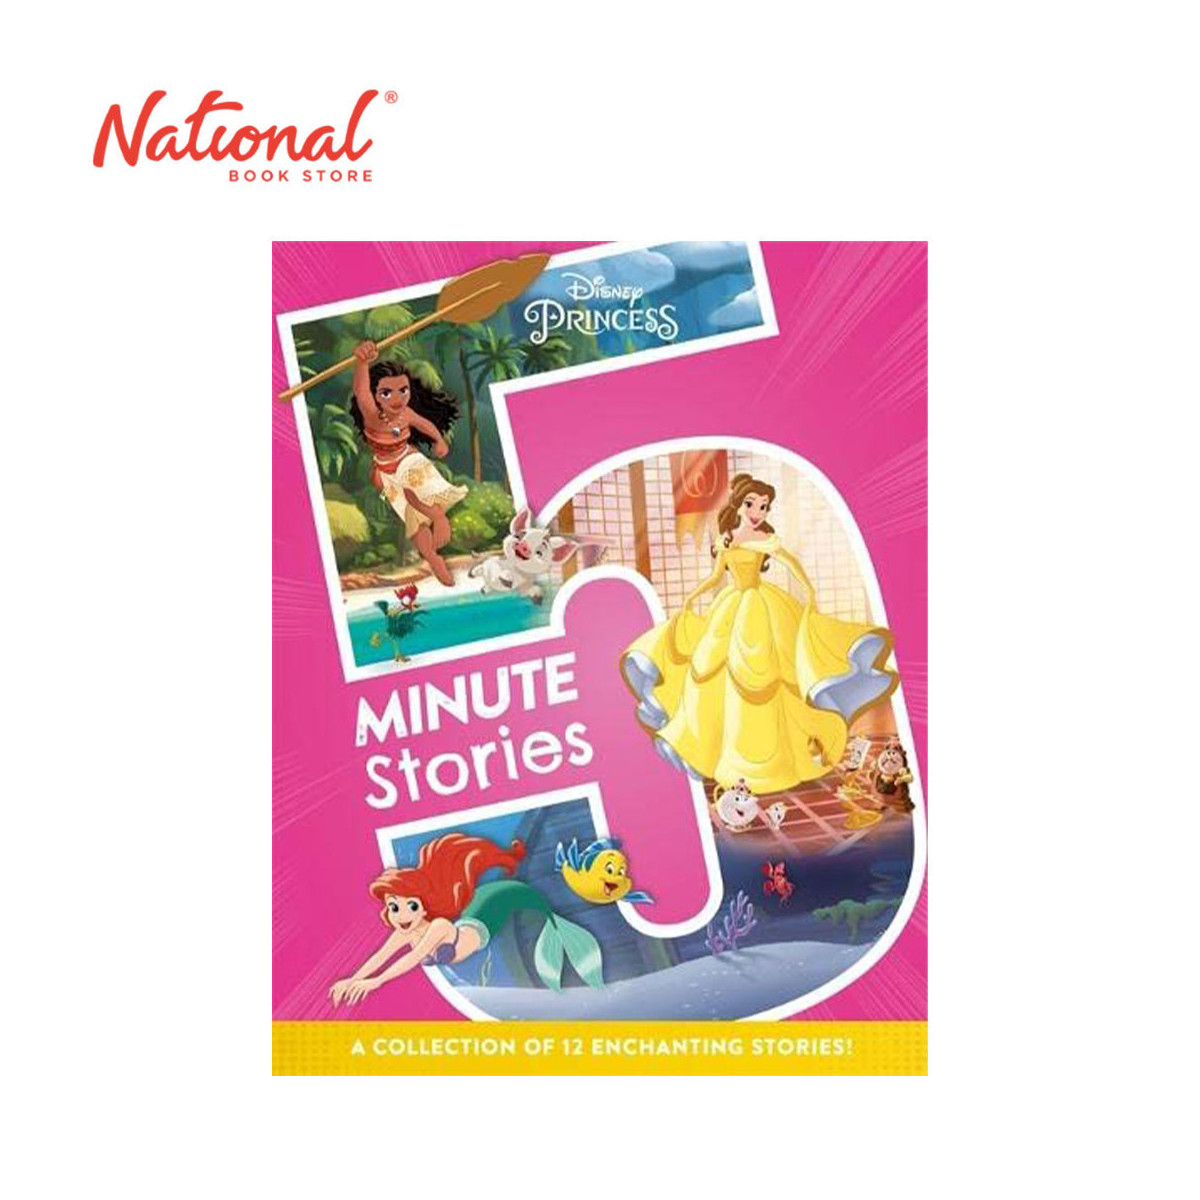 Disney Princess 5 Minute Stories - Trade Paperback - Books for Kids - Storybooks